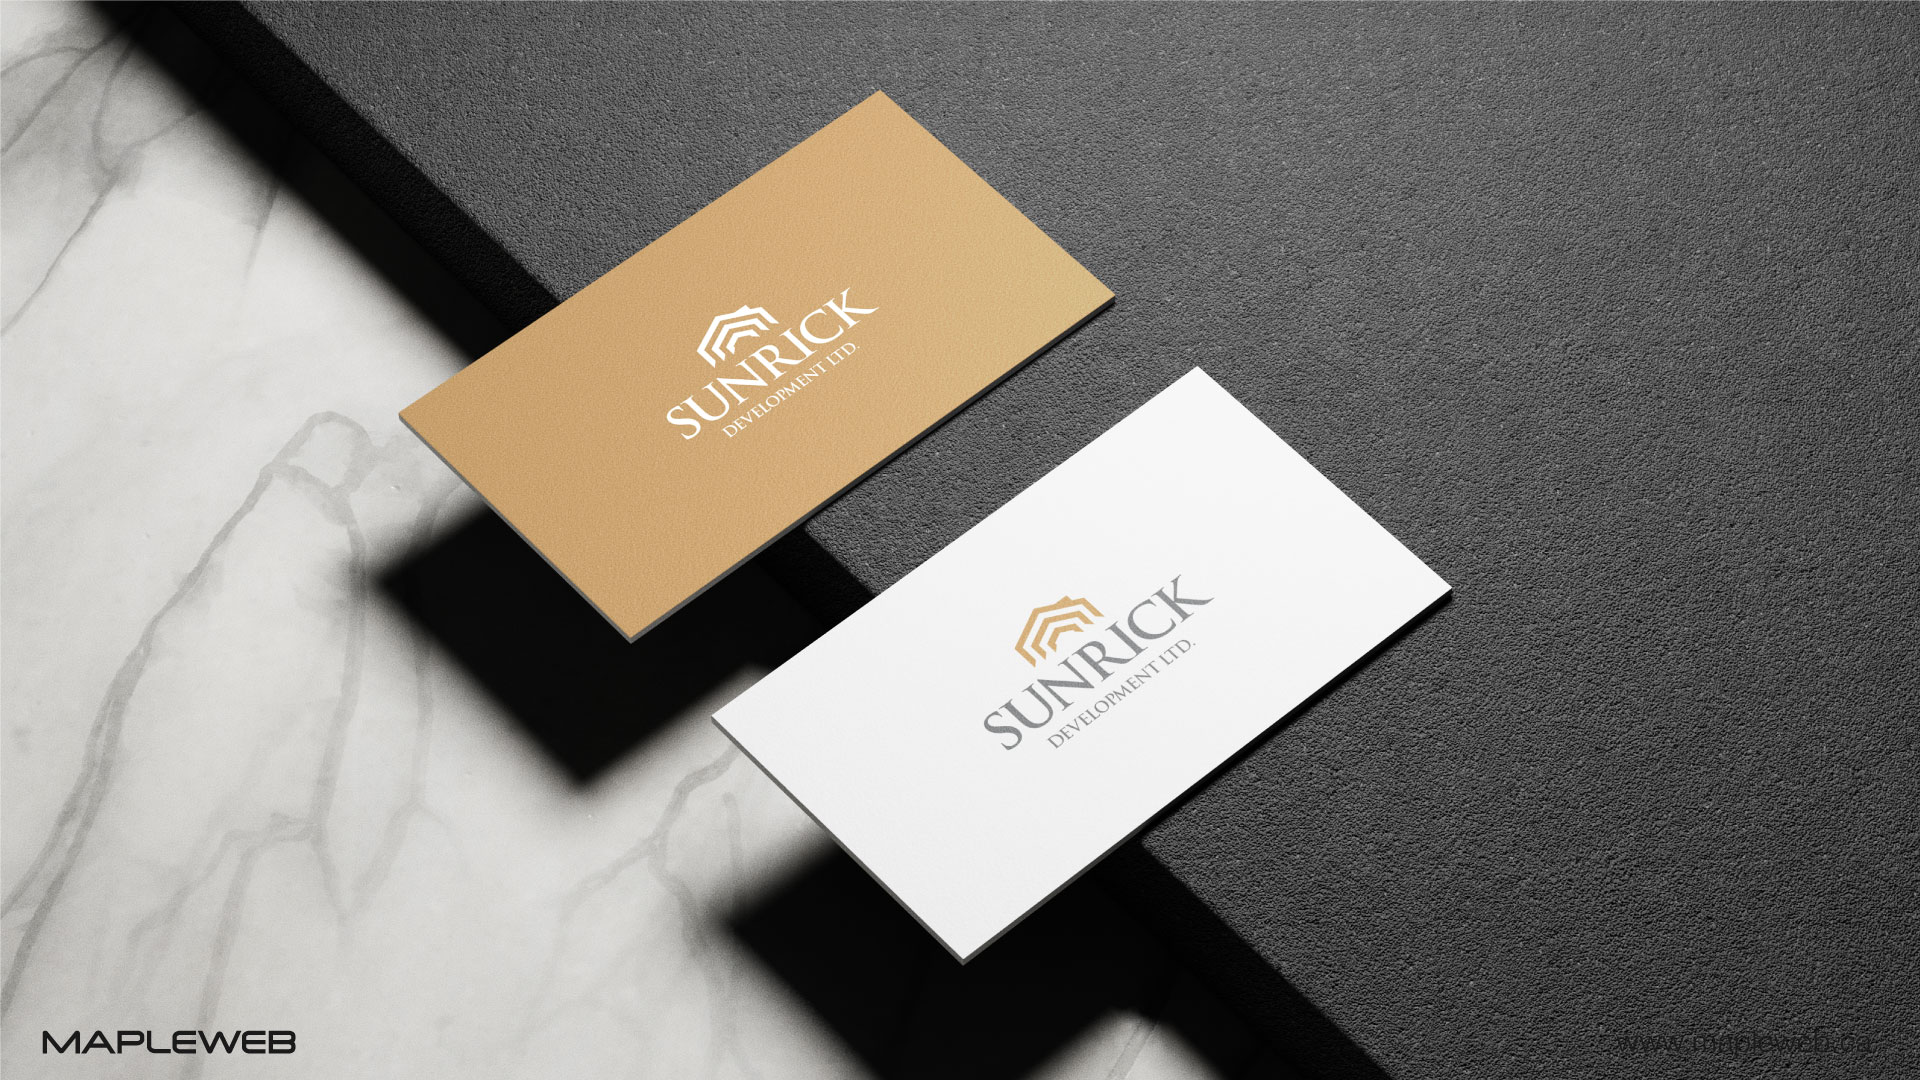 sunrick-development-ltd-brand-logo-design-by-mapleweb-vancouver-canada-business-card-01-mock